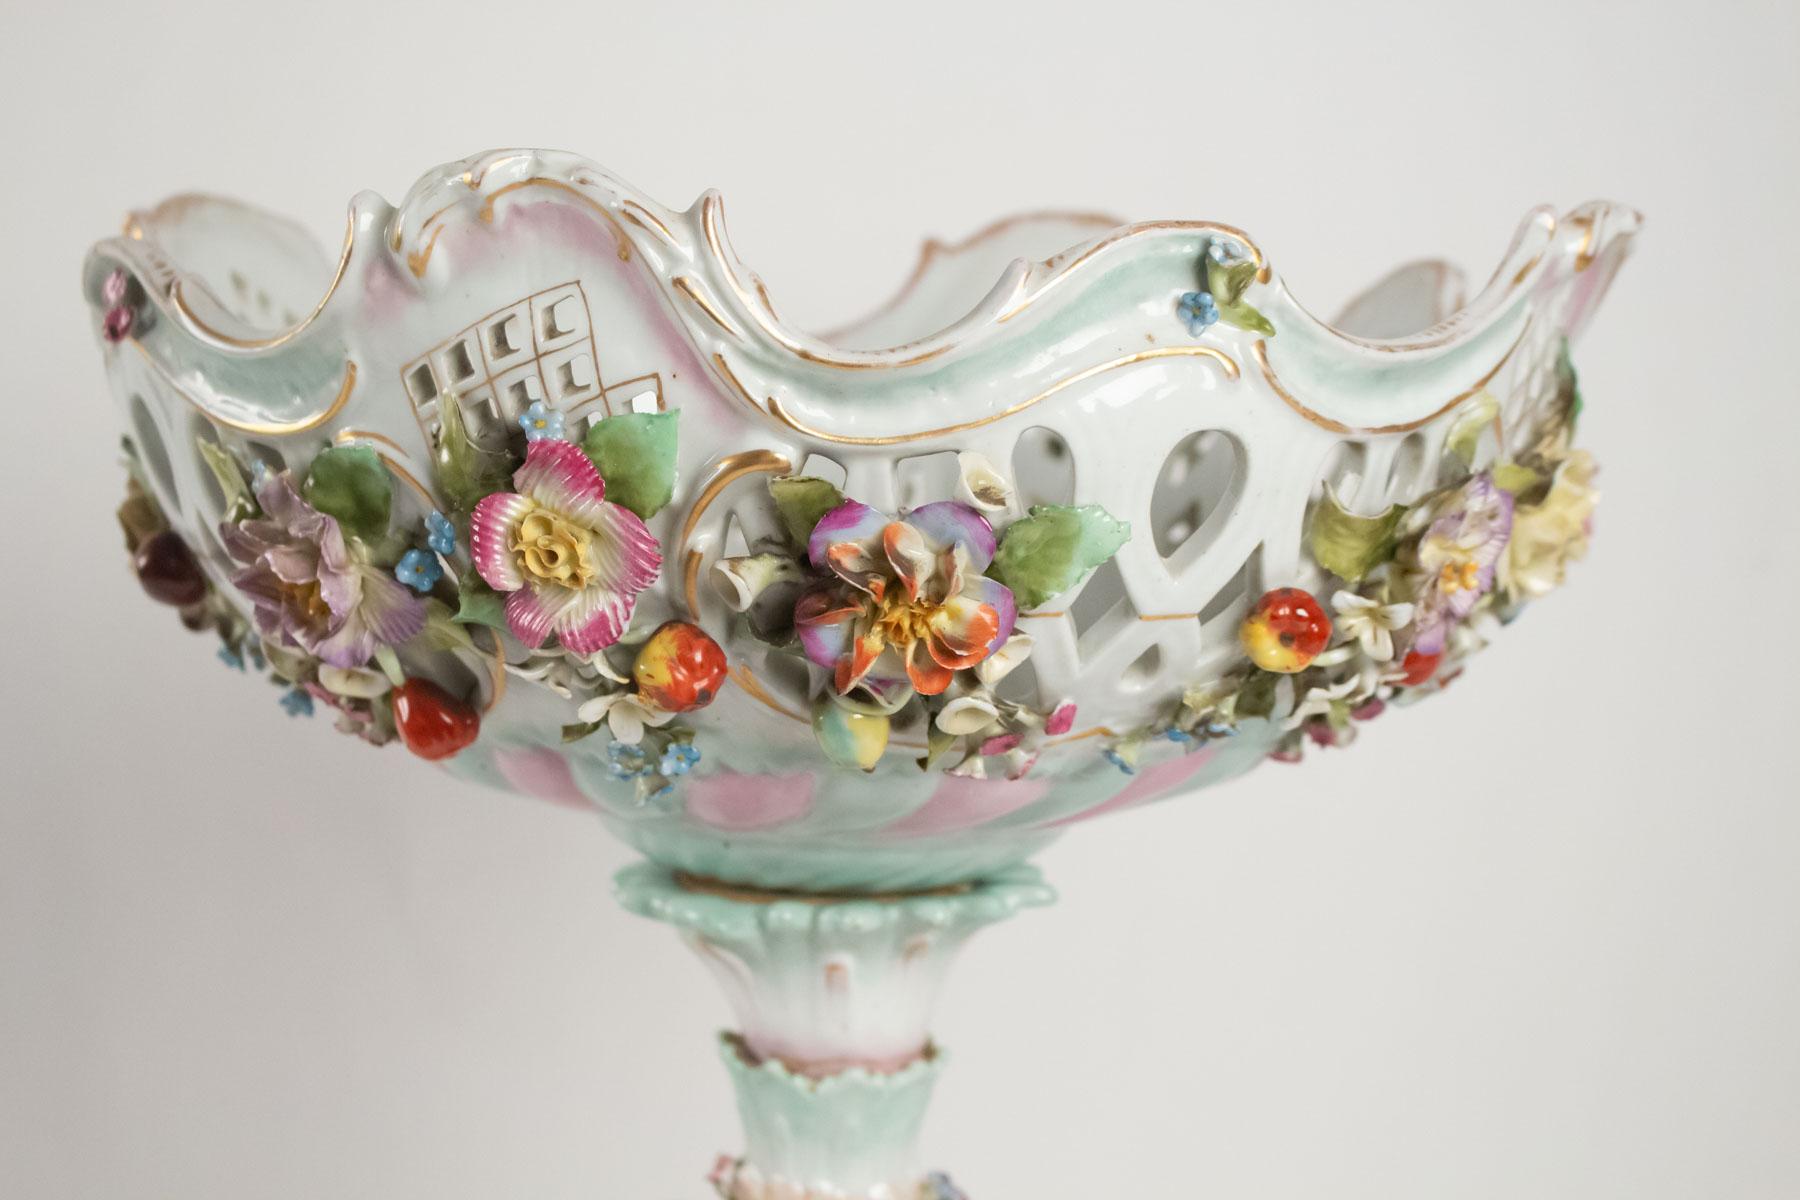 Porcelain cup, brand in bottom, 1900, spring dance, cut openwork, German porcelain
Measures: H 50cm, D 33cm.